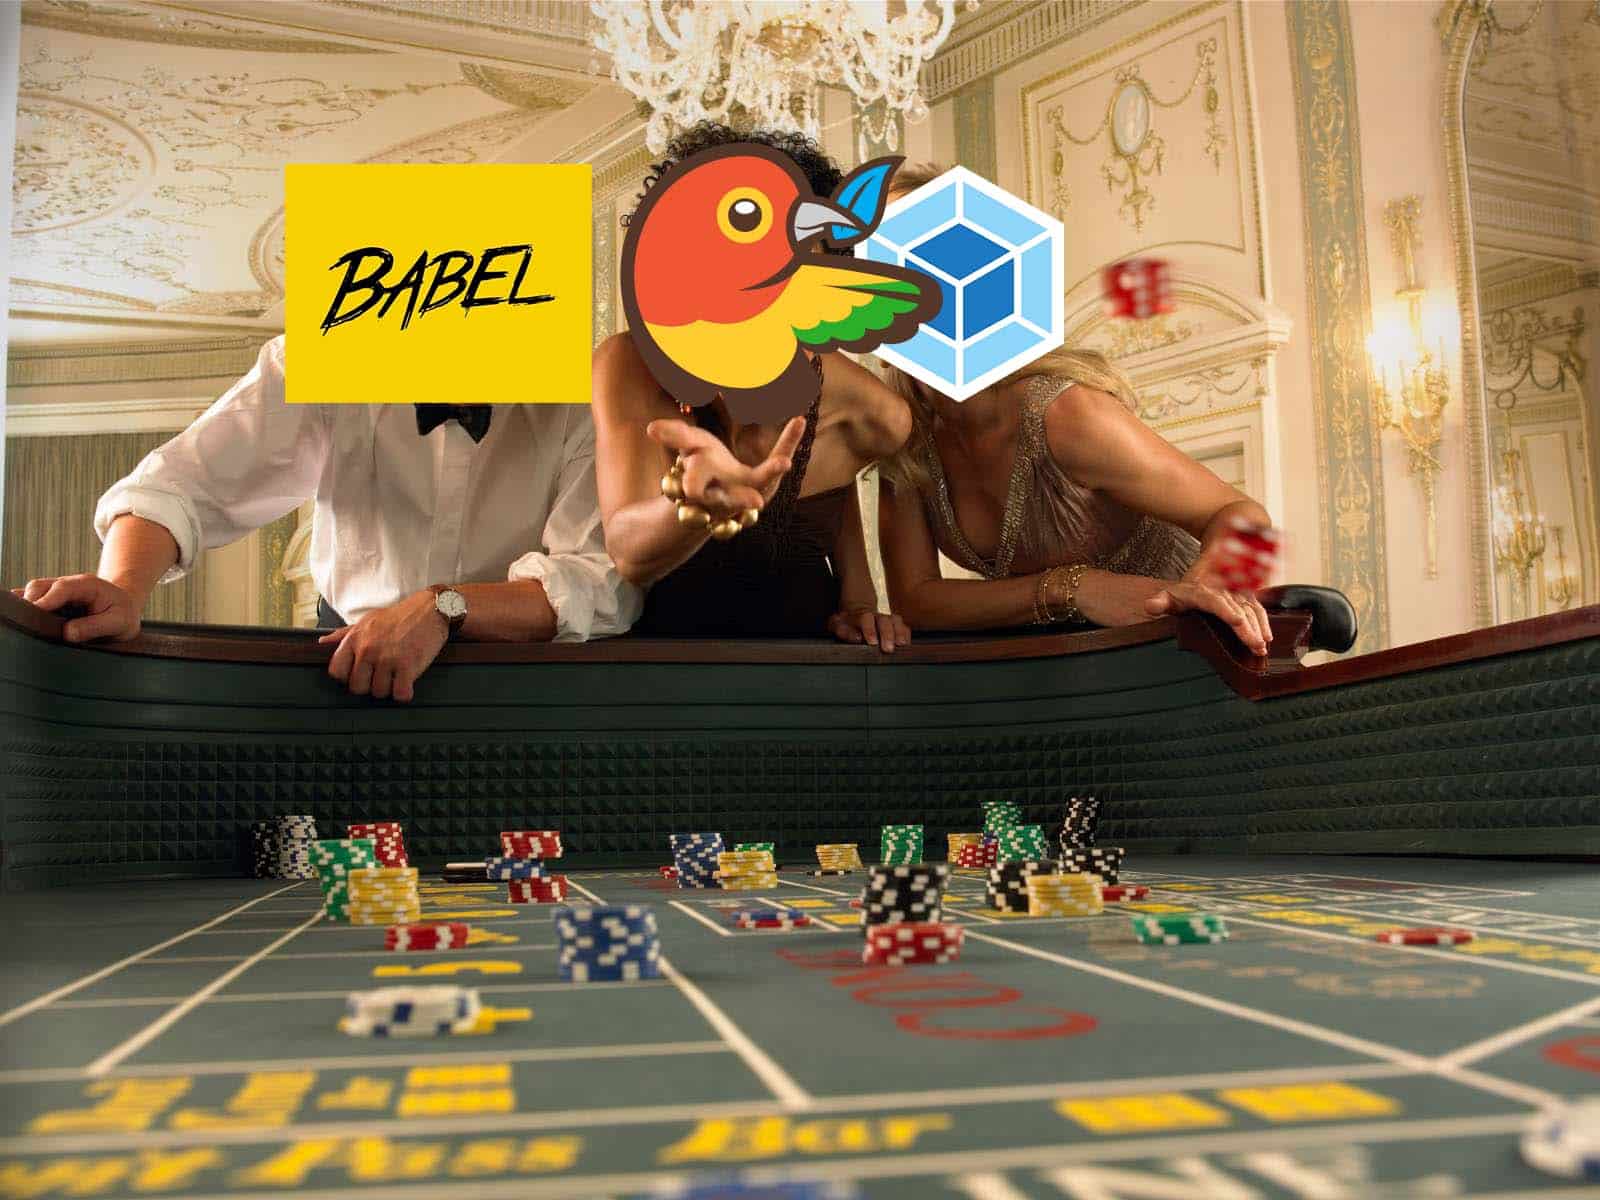 Babel, Webpack, and Bower gambling